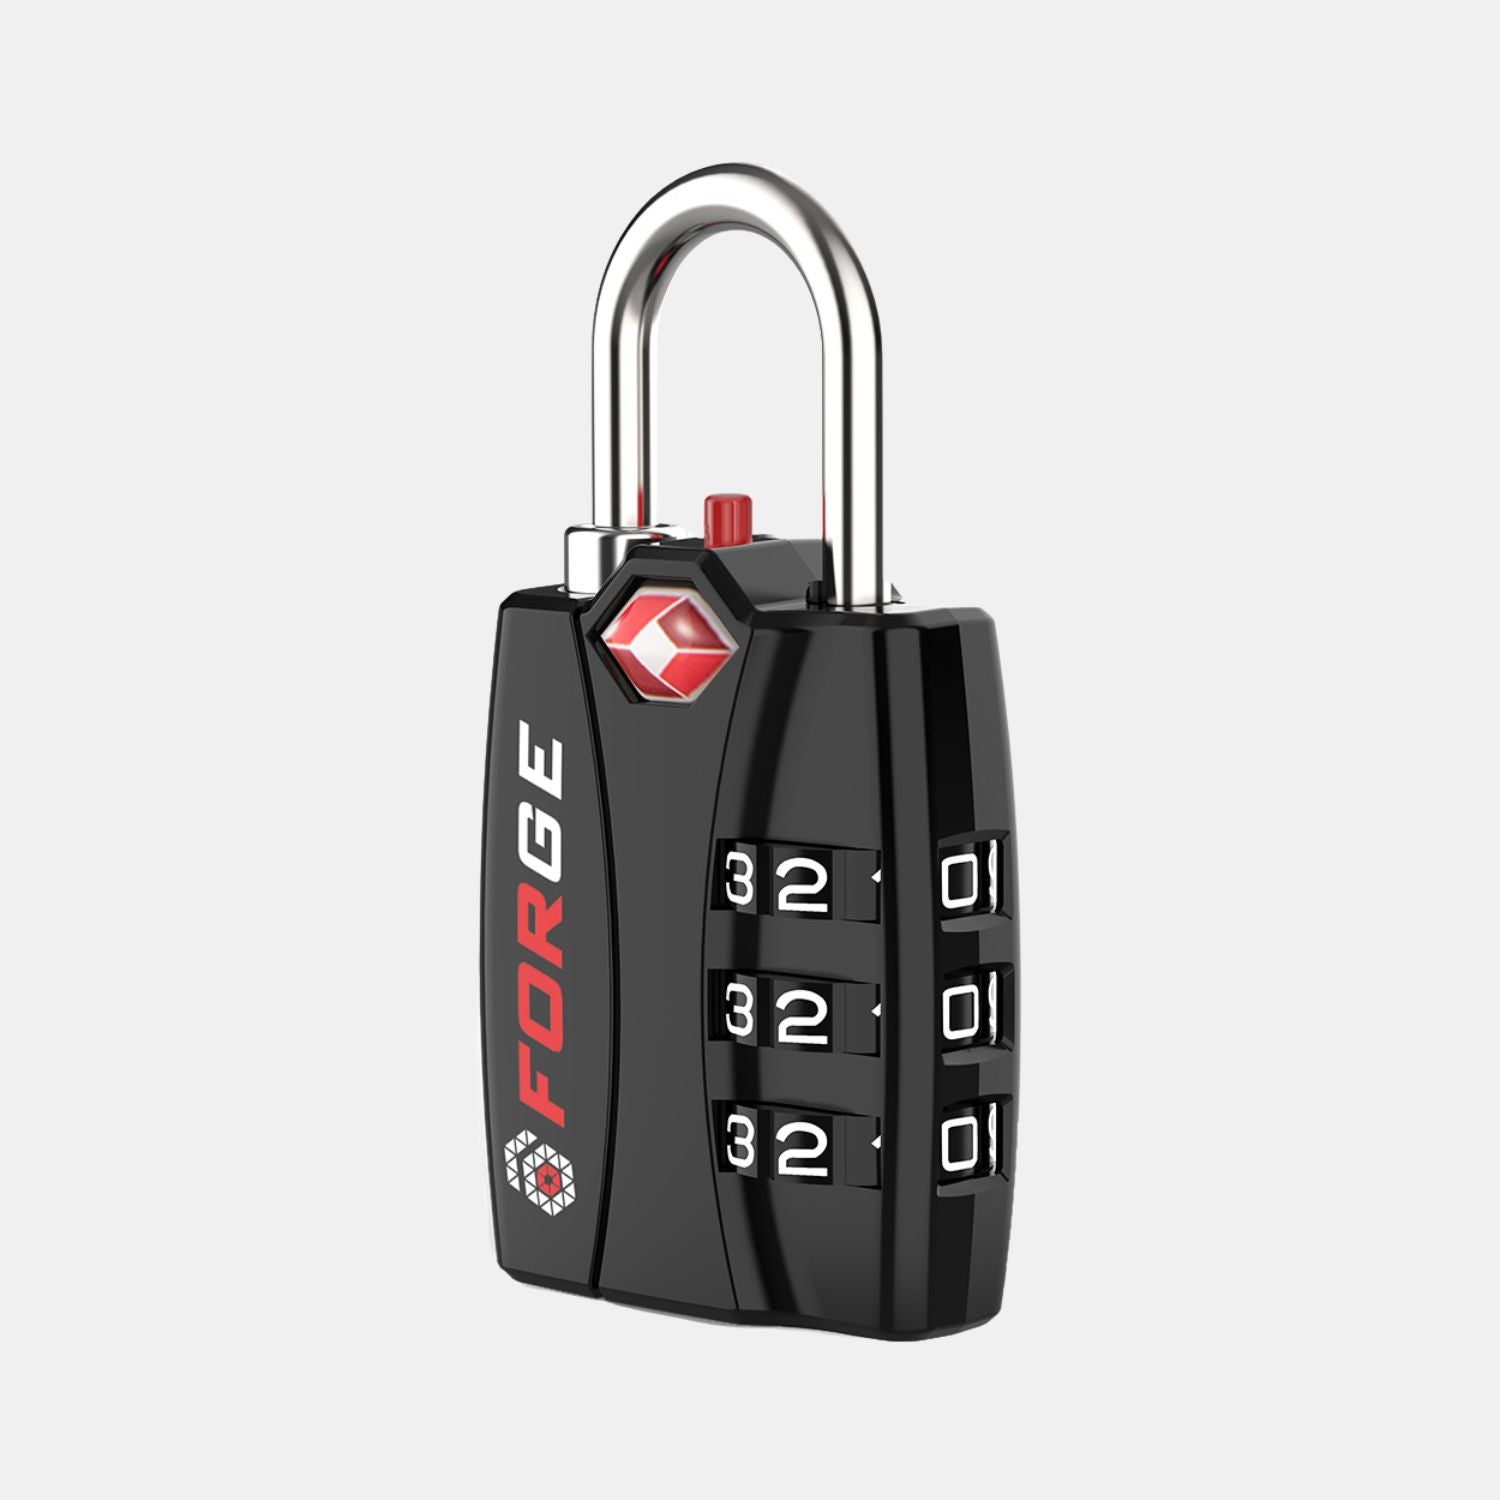 TSA-Approved Luggage Locks: 3-Digit Combination, Open Alert Indicator, Black 1 Lock